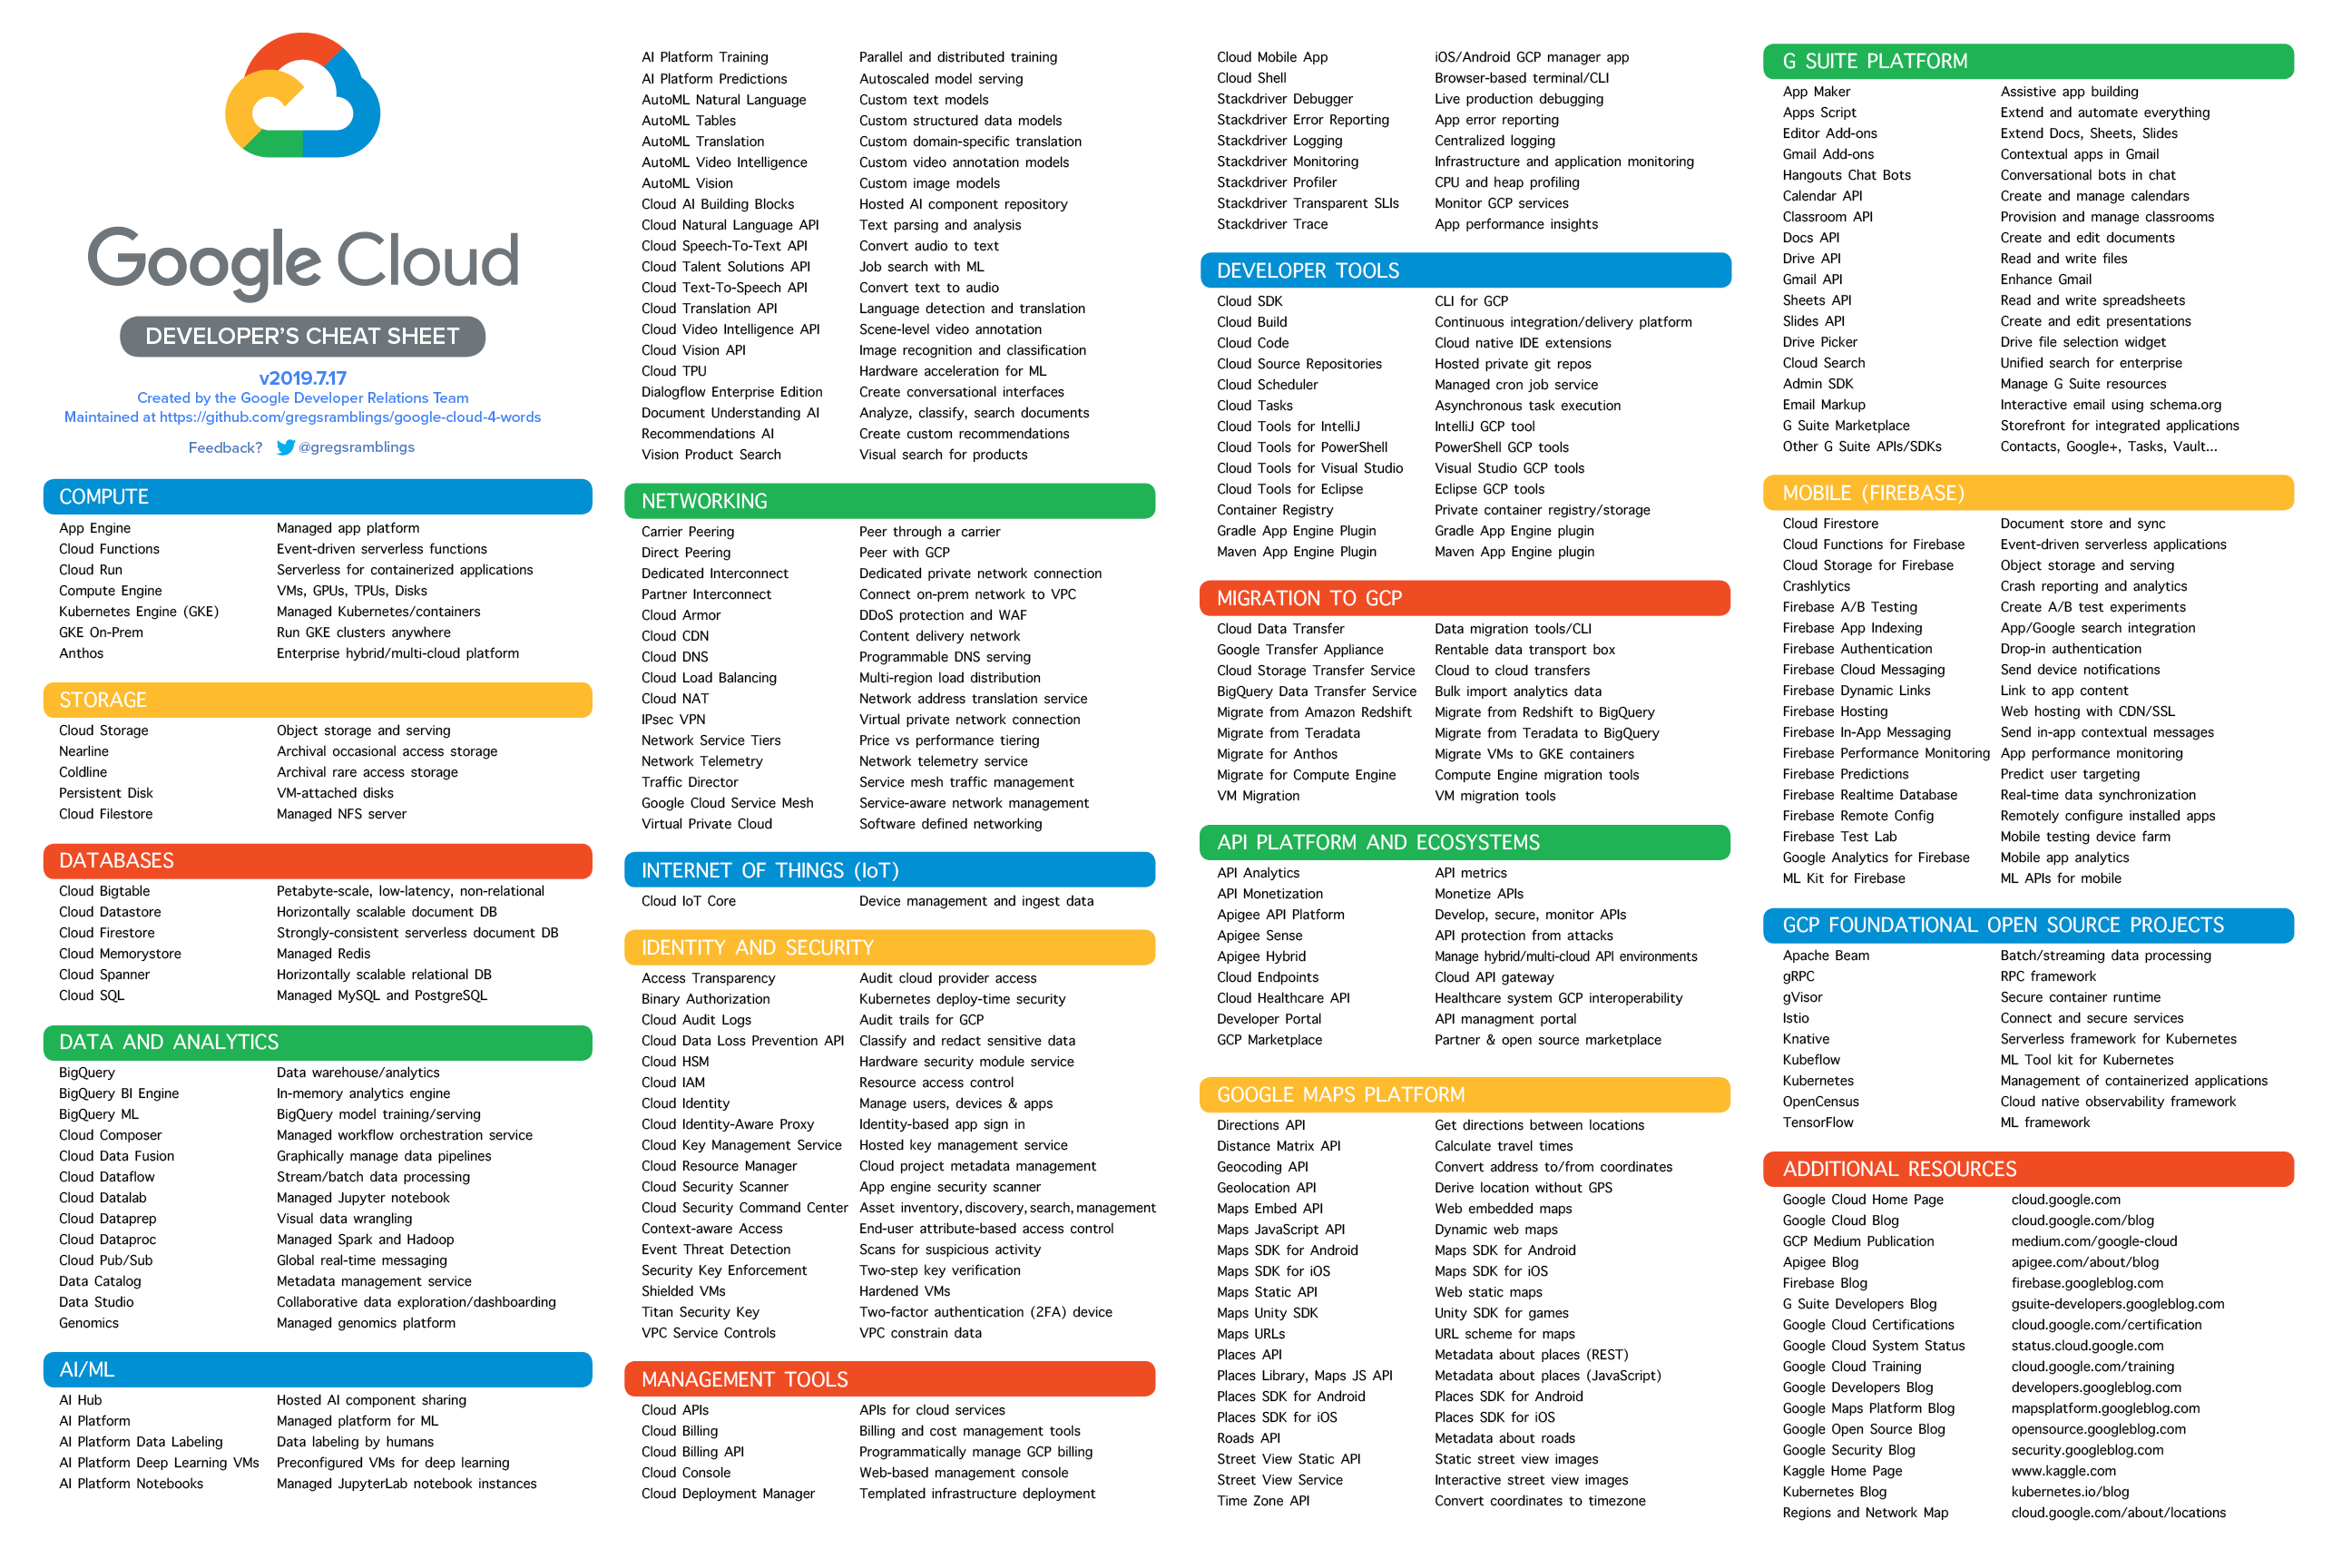 Google Cloud Developer's Cheat Sheet Poster Image